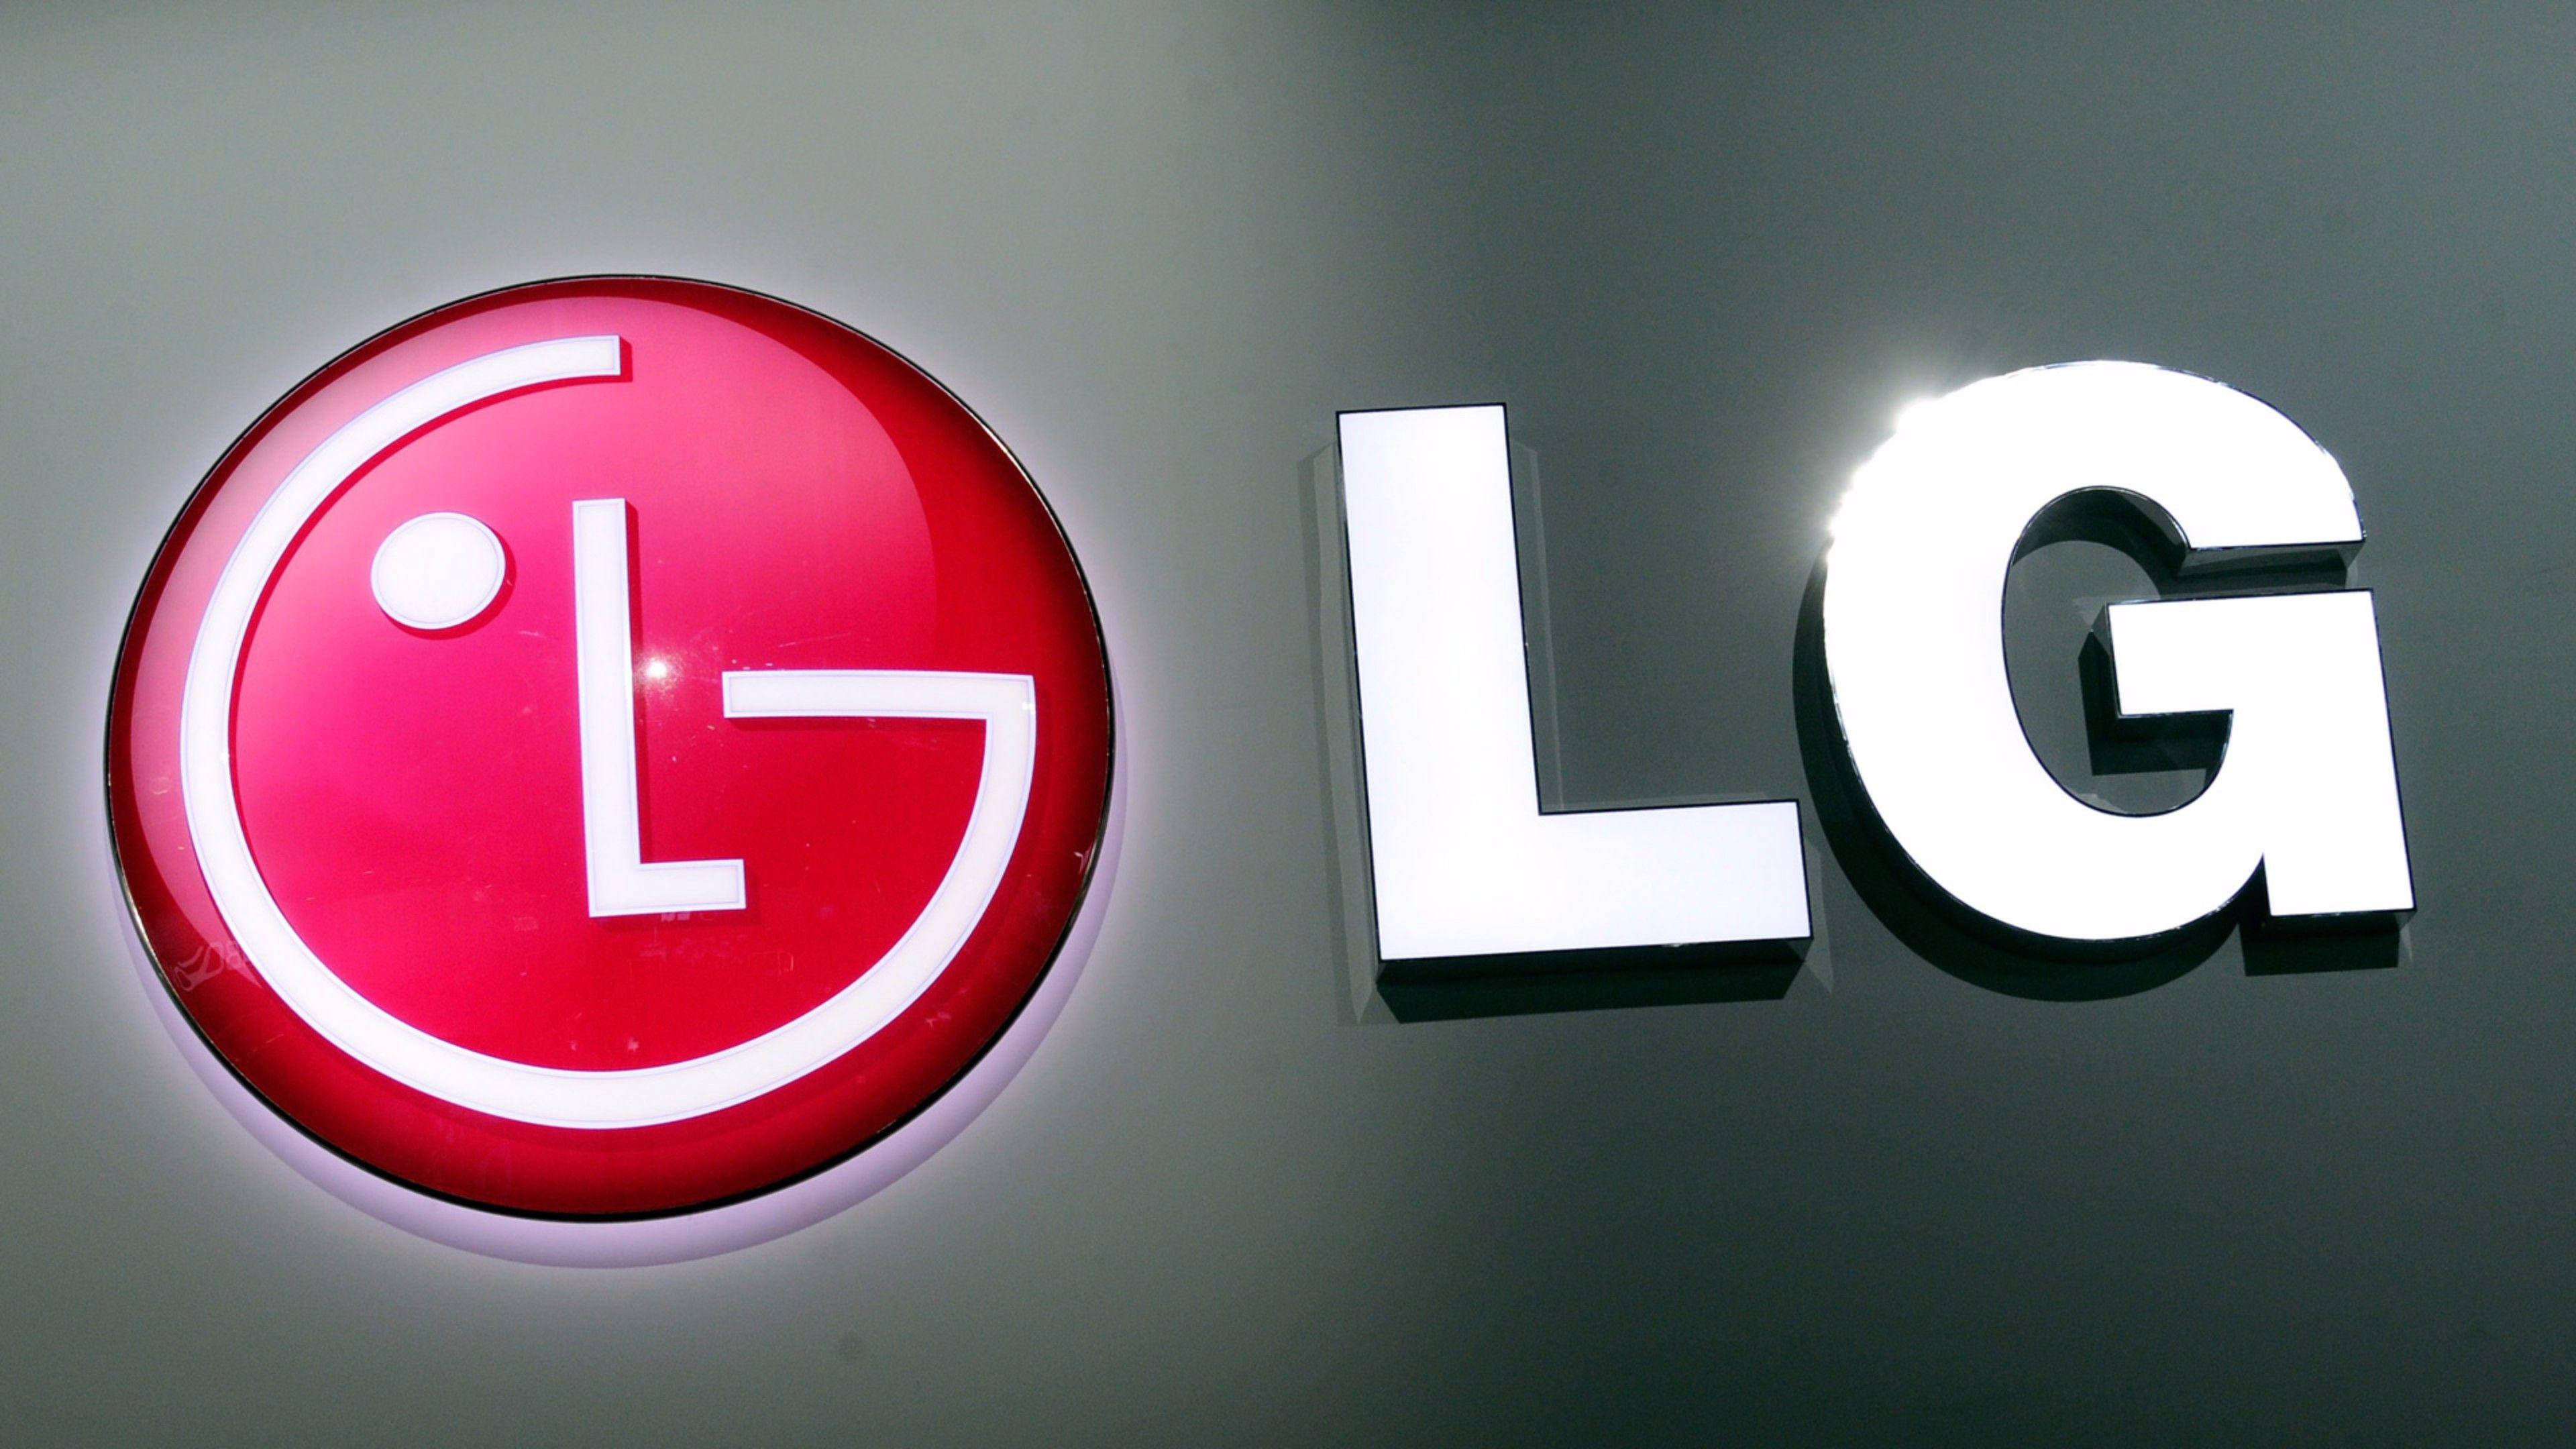 3D LG TV Logo Wallpaper